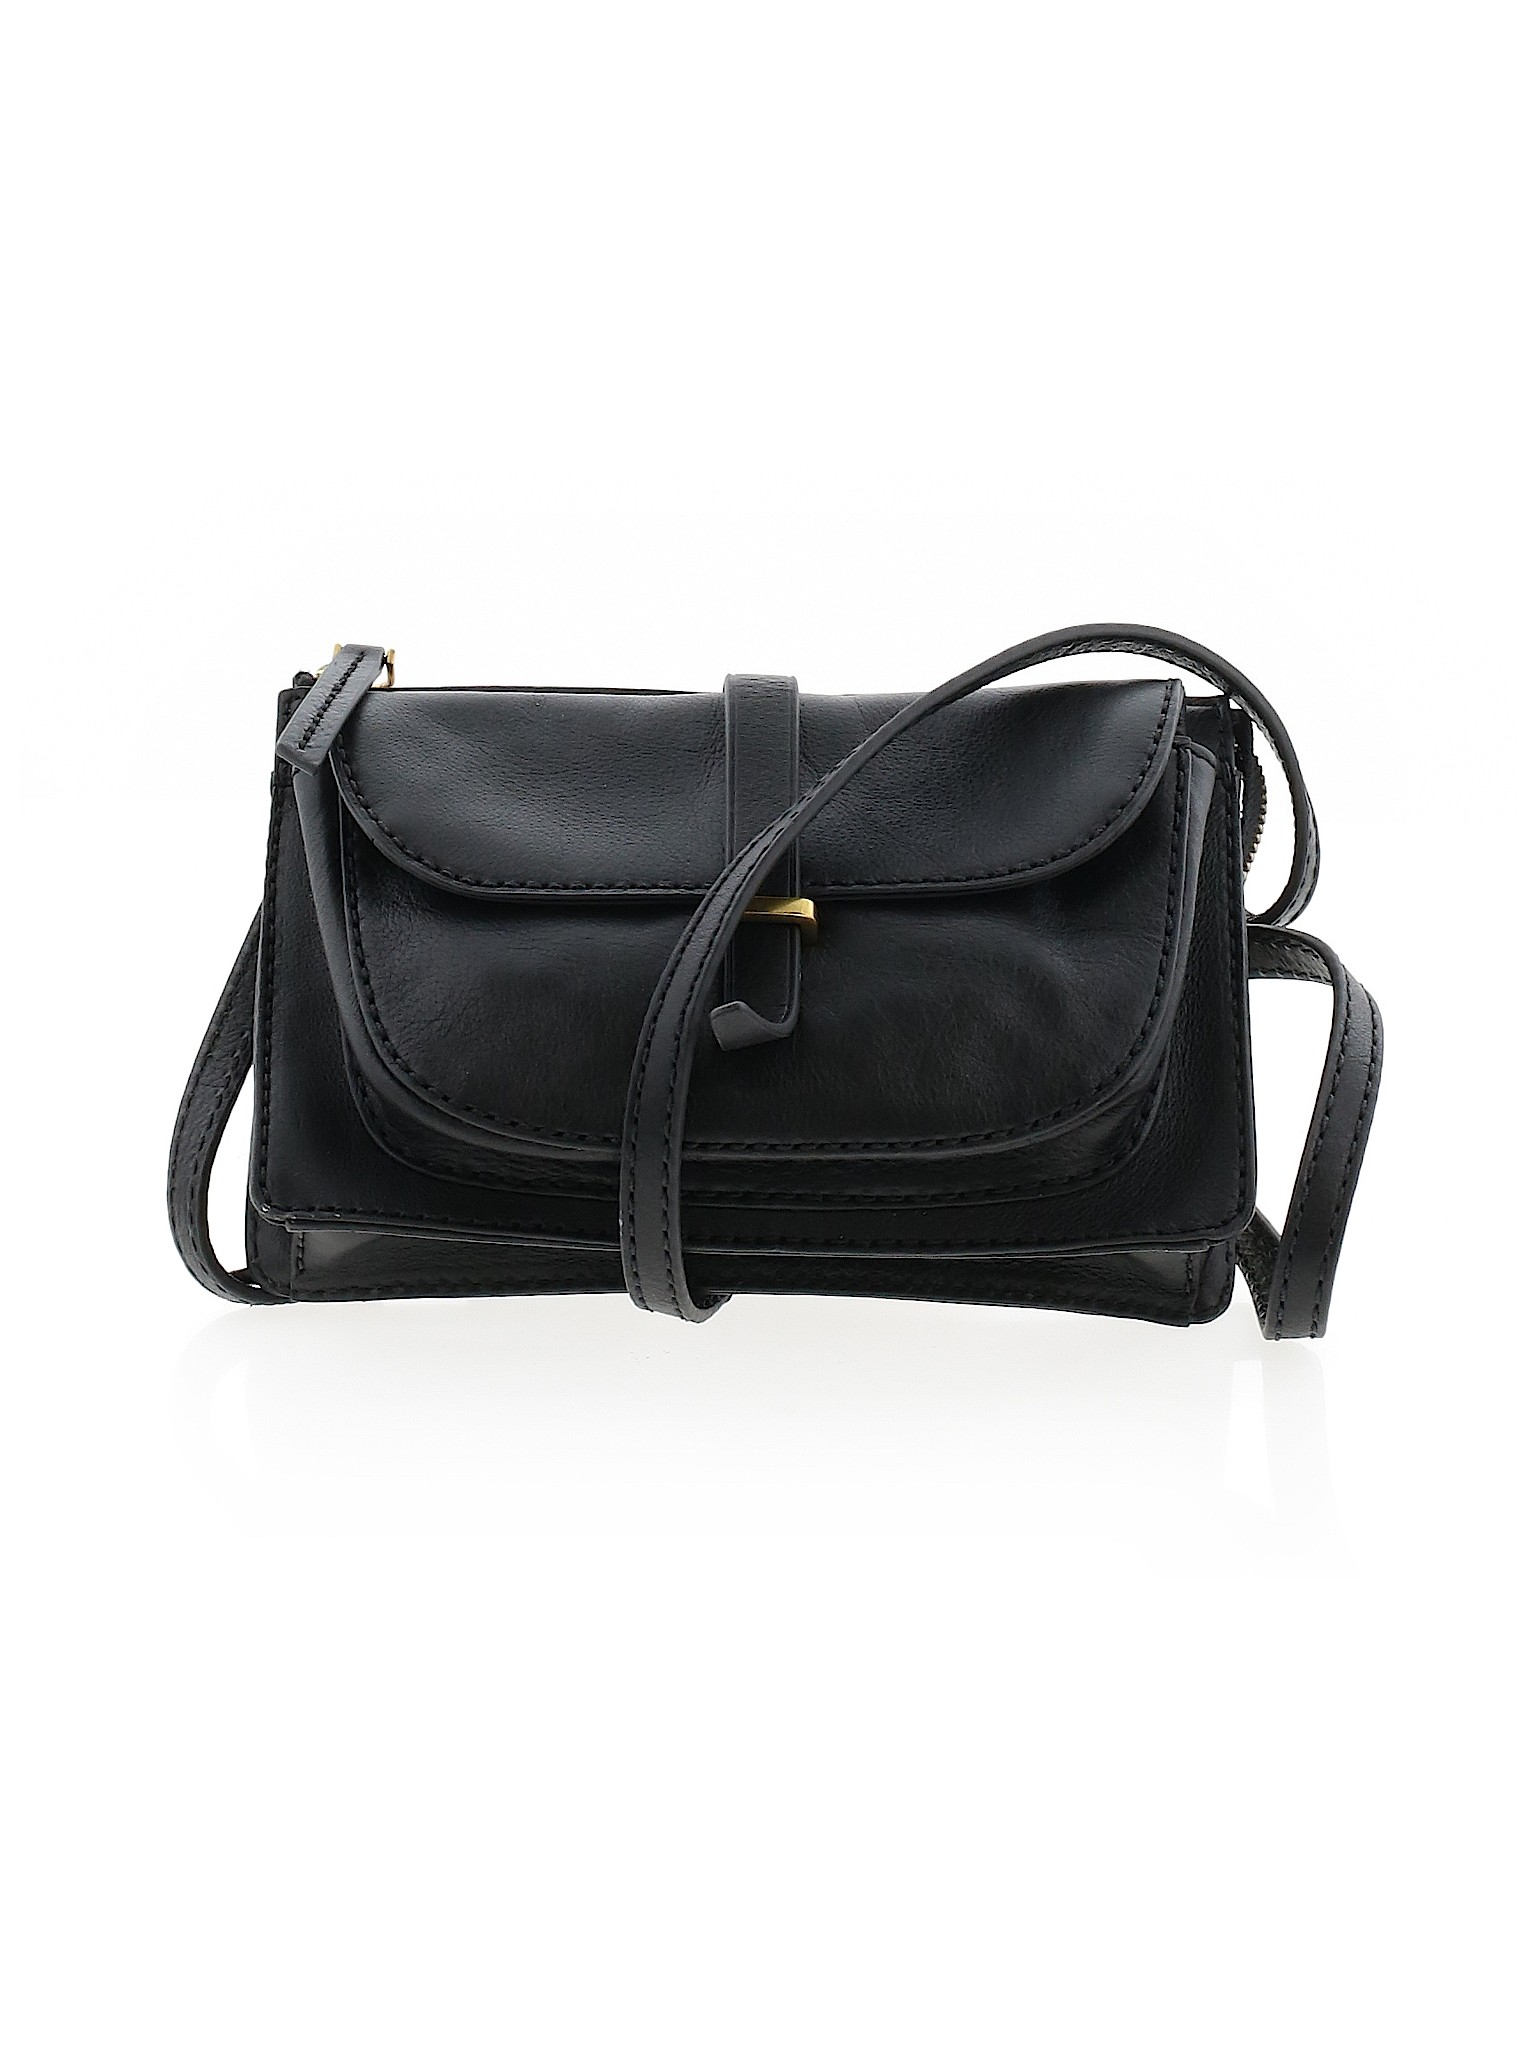 Fossil Women Black Leather Crossbody Bag One Size | eBay